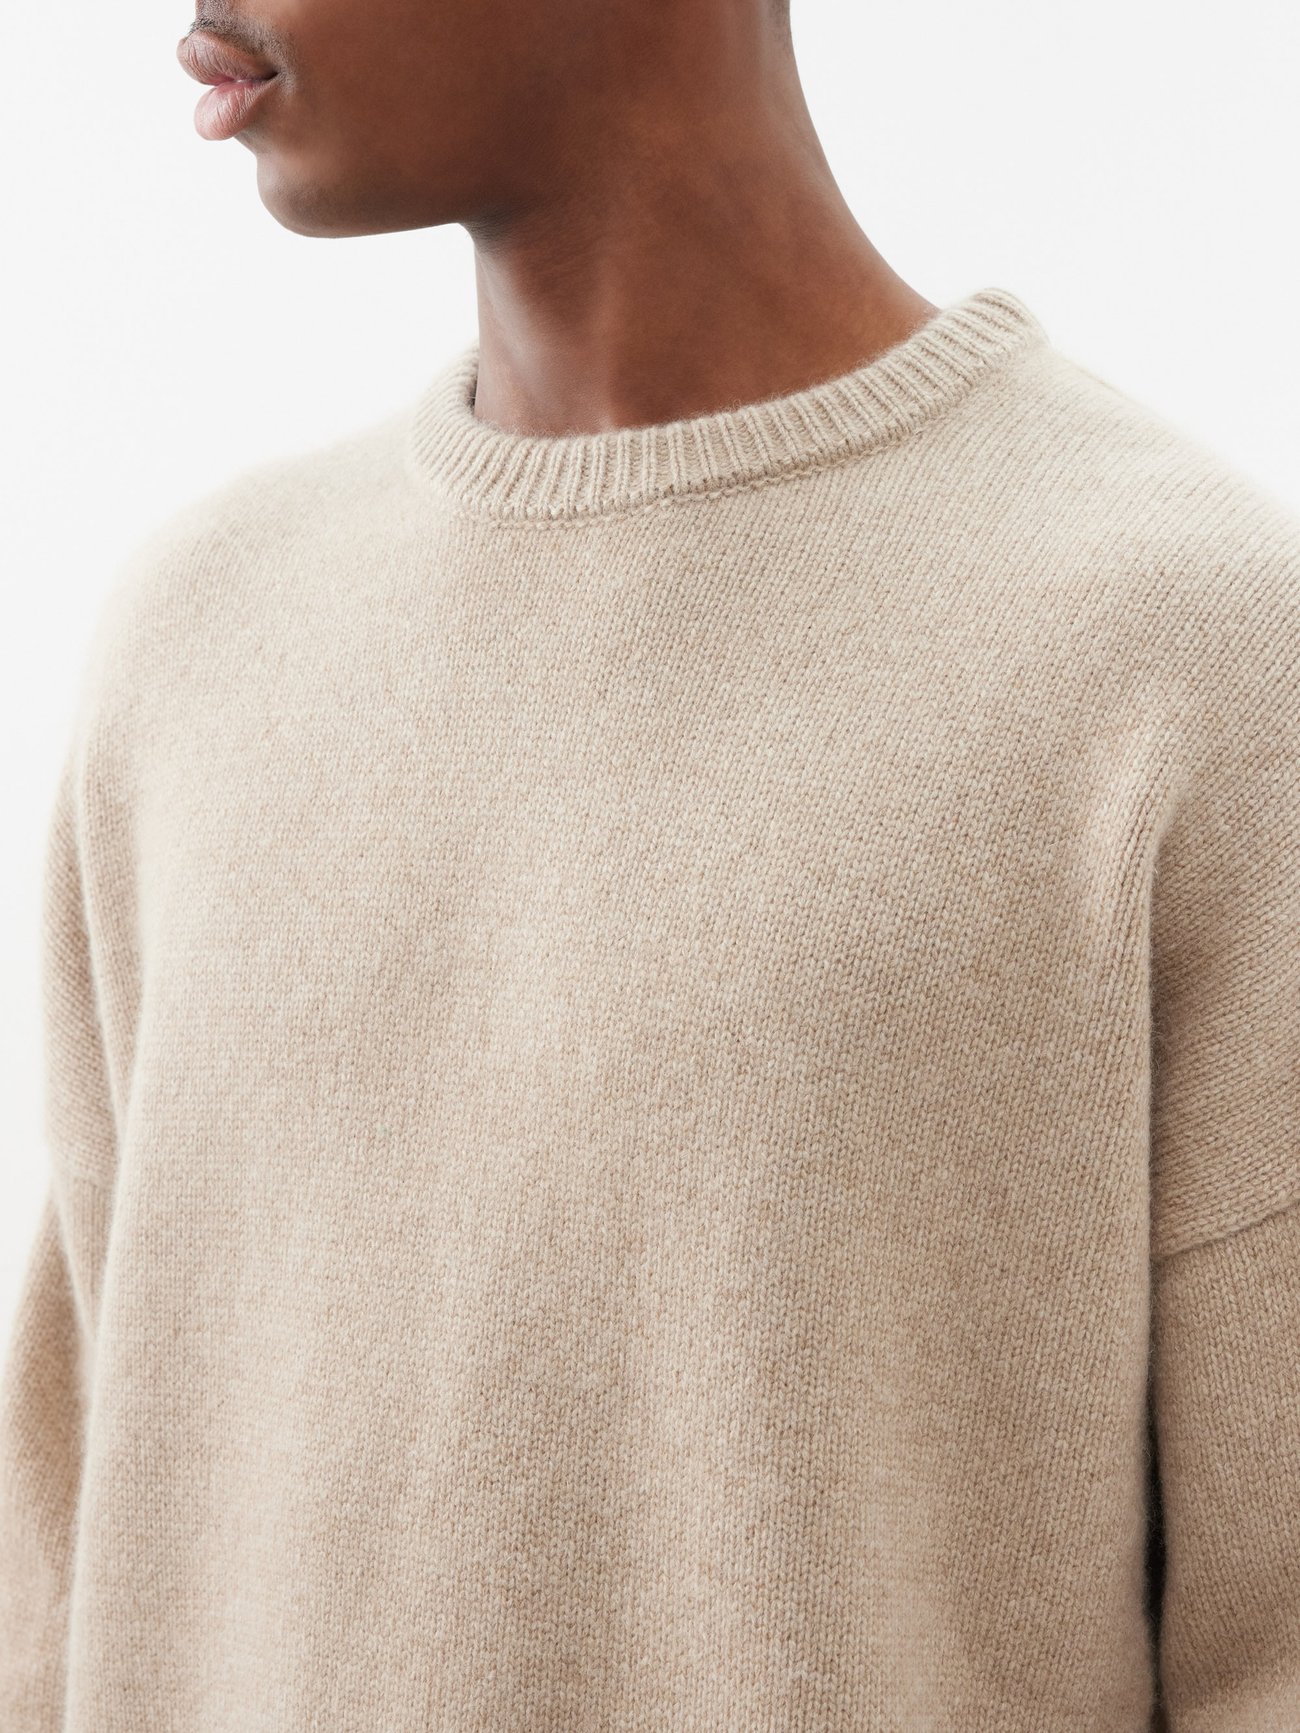 Mr Paddington Sweater - Taupe Marl – arch4